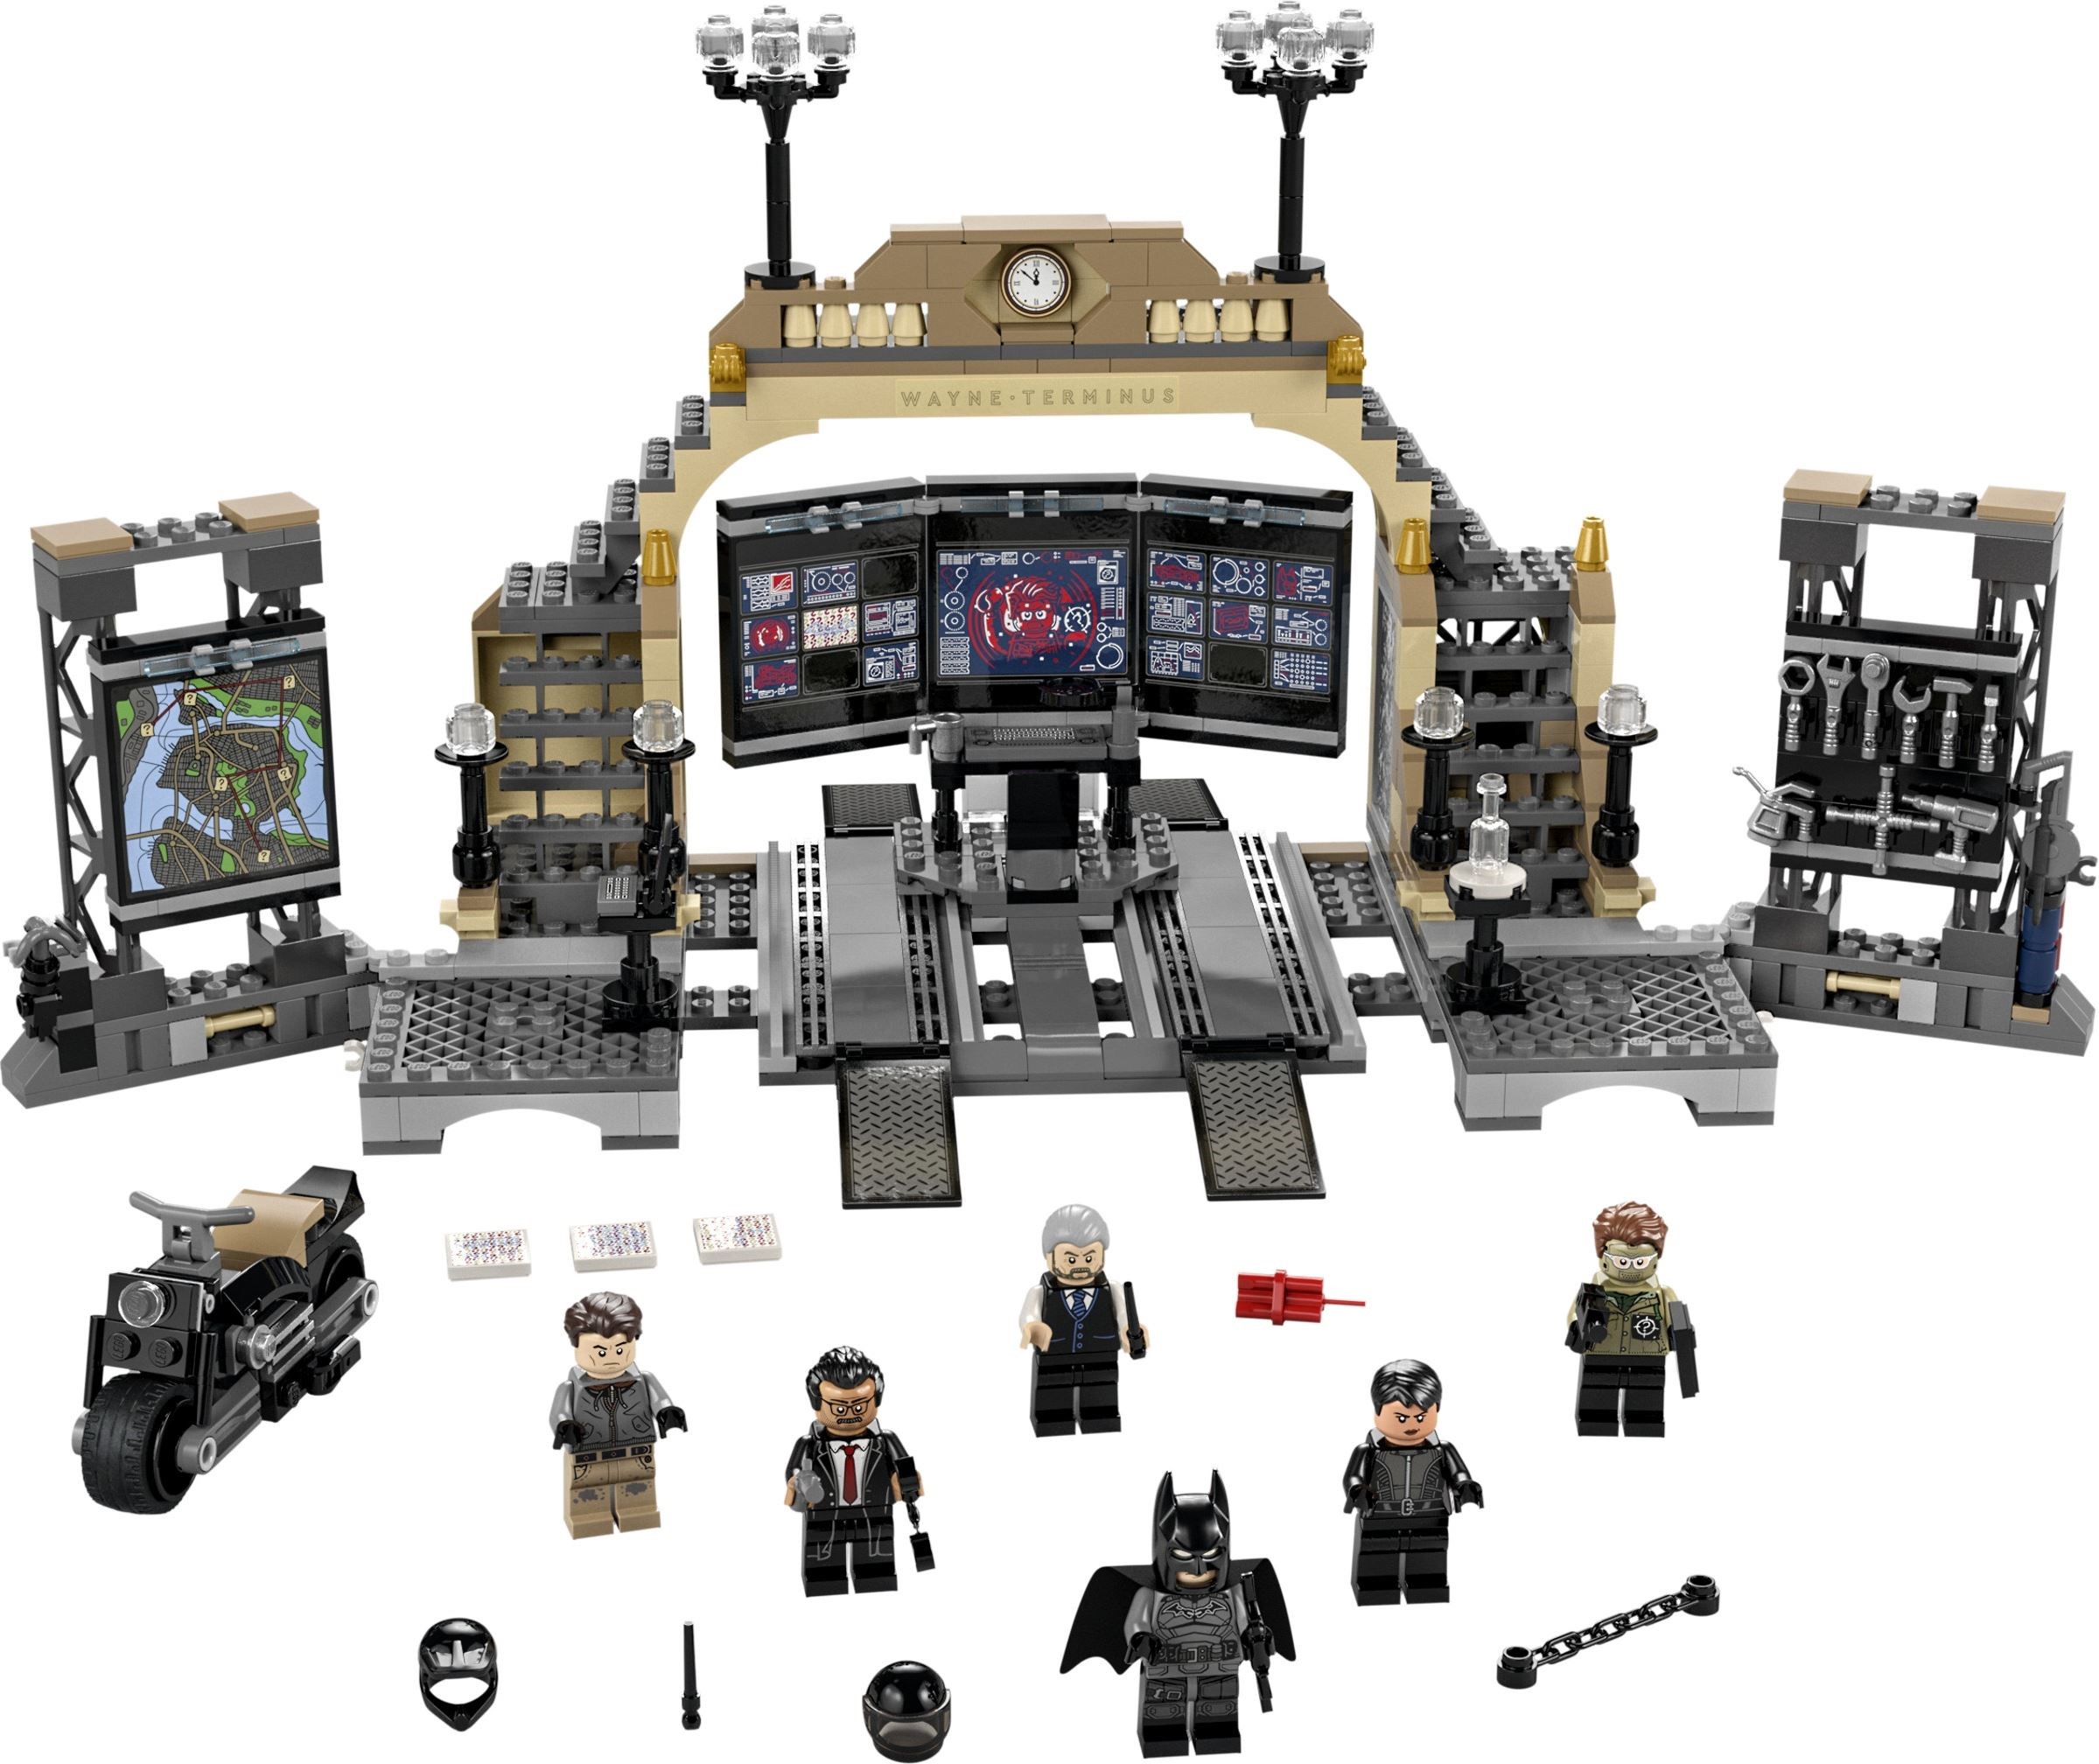 HOW TO UPGRADE THE BATMAN LEGO Minifig (Robert Pattinson 2022